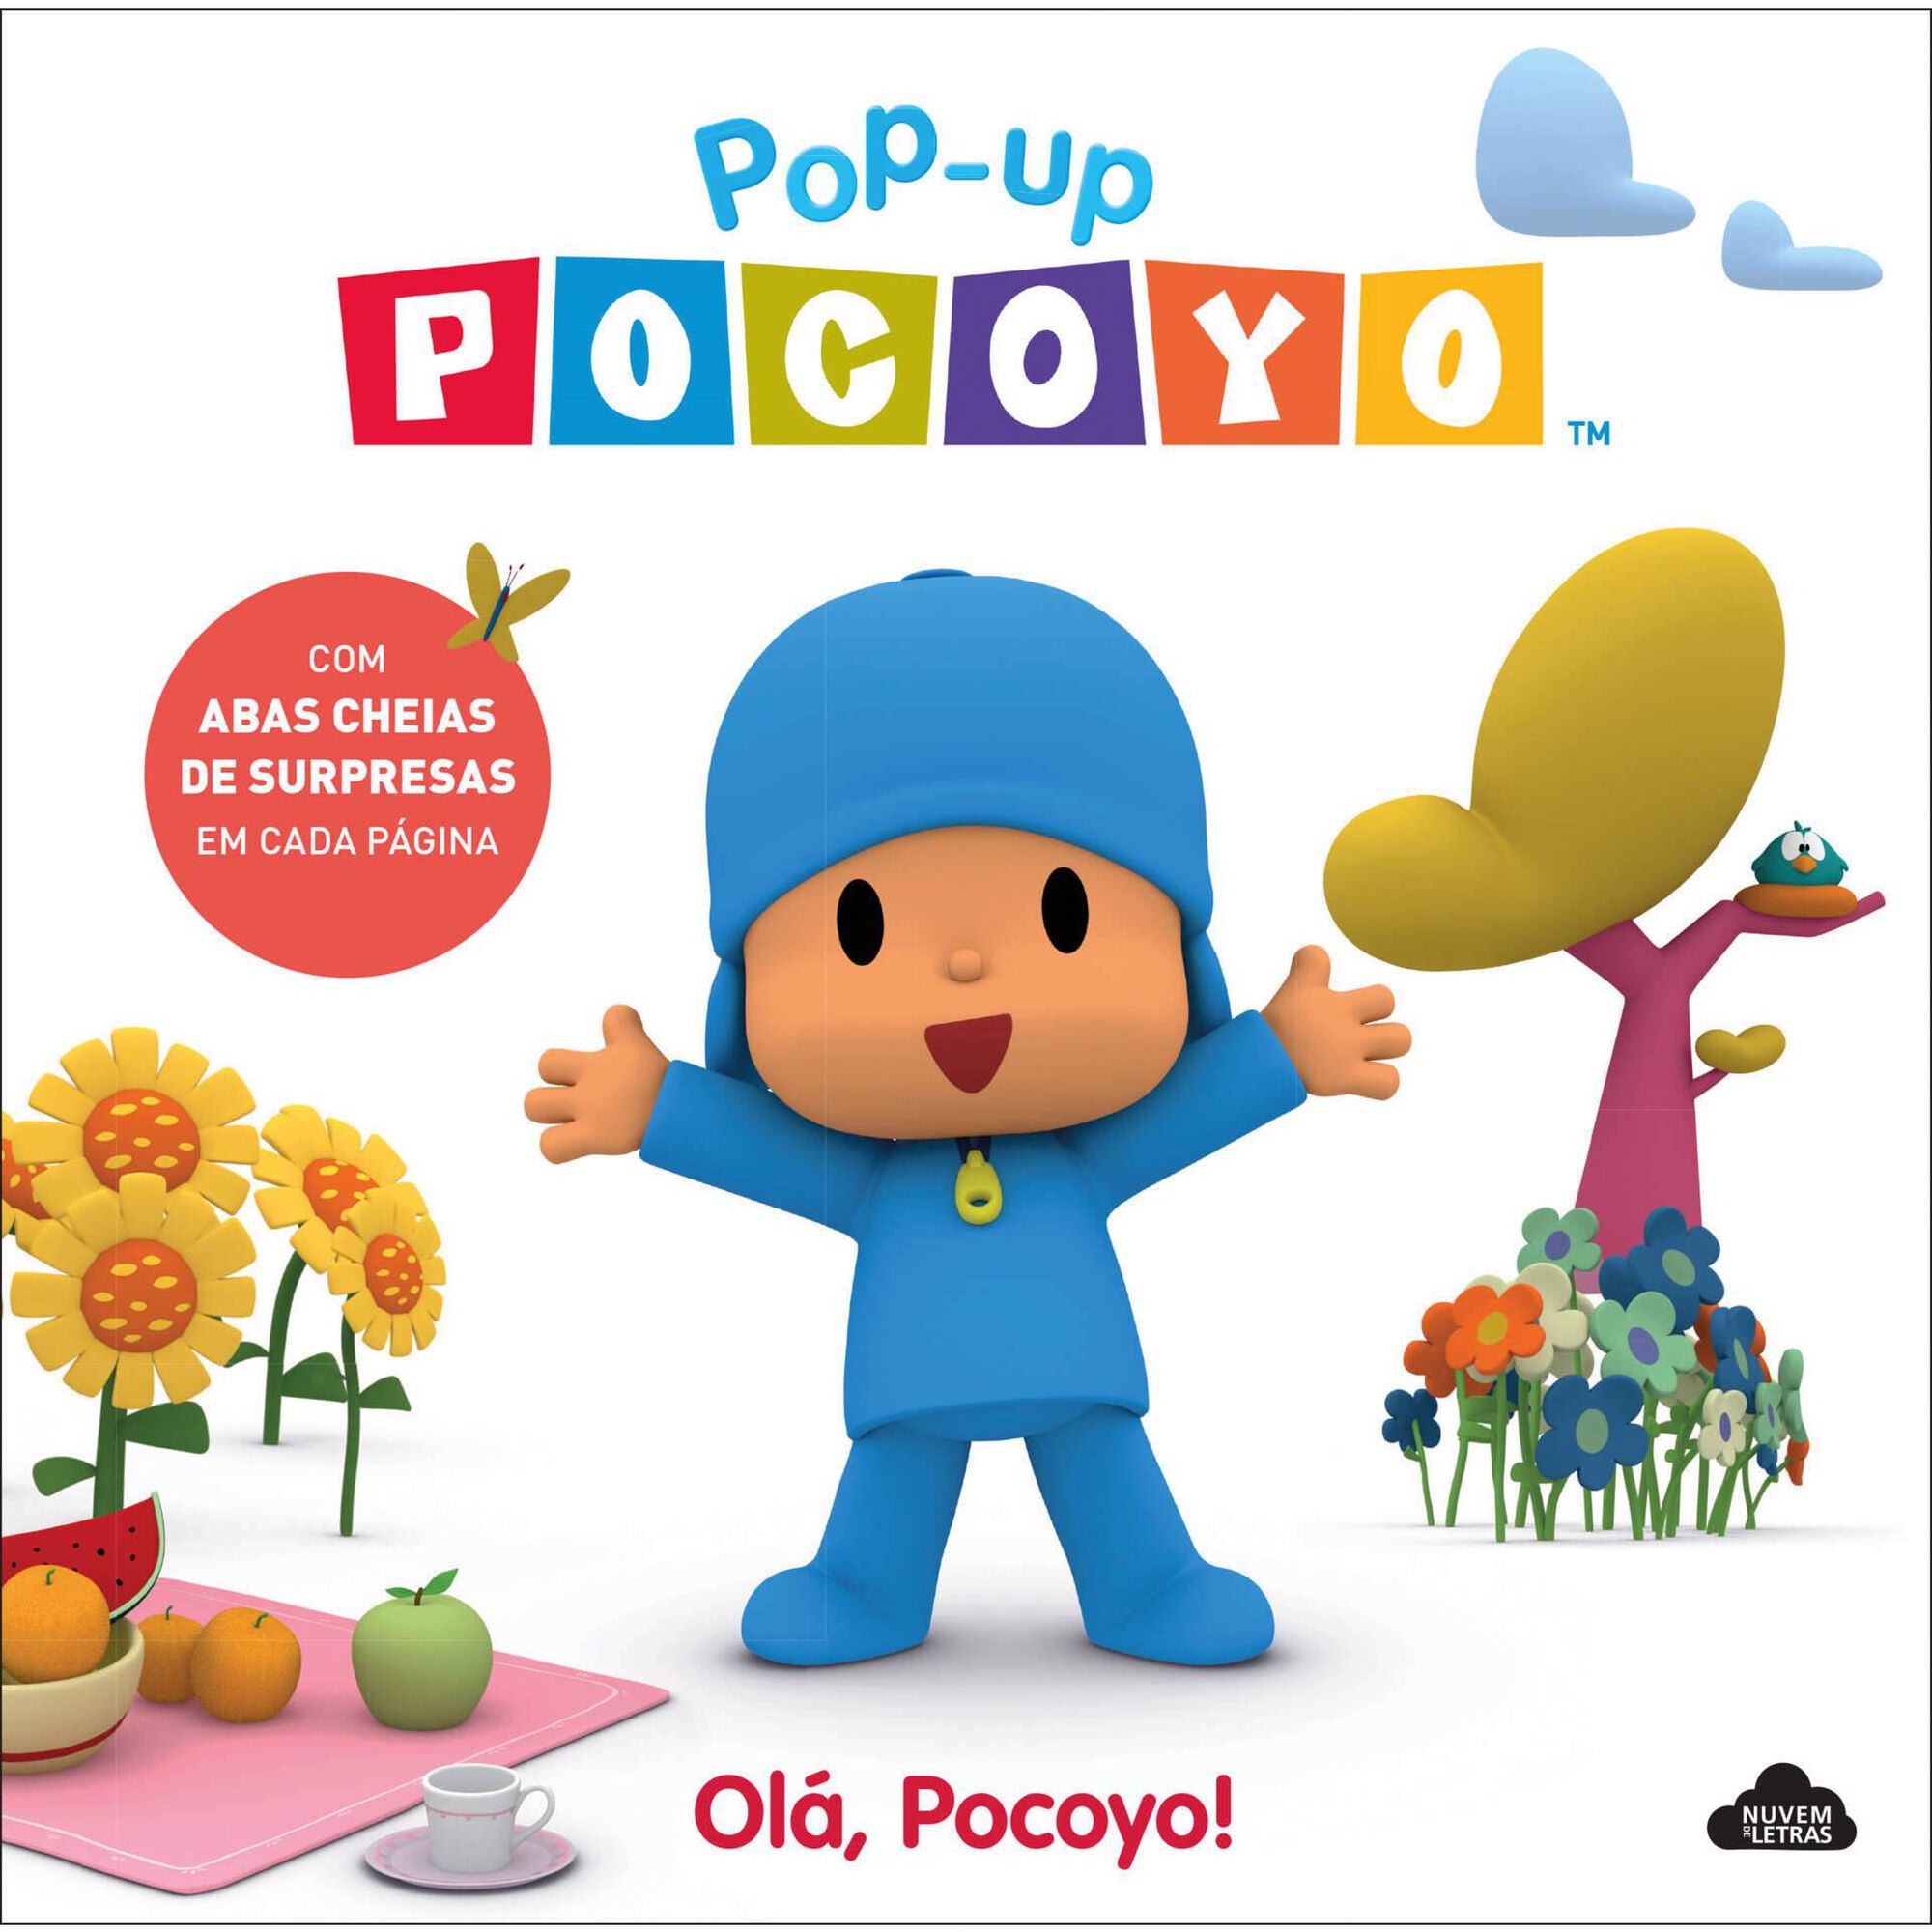 Pocoyo Pop: Jogo balões – Apps no Google Play